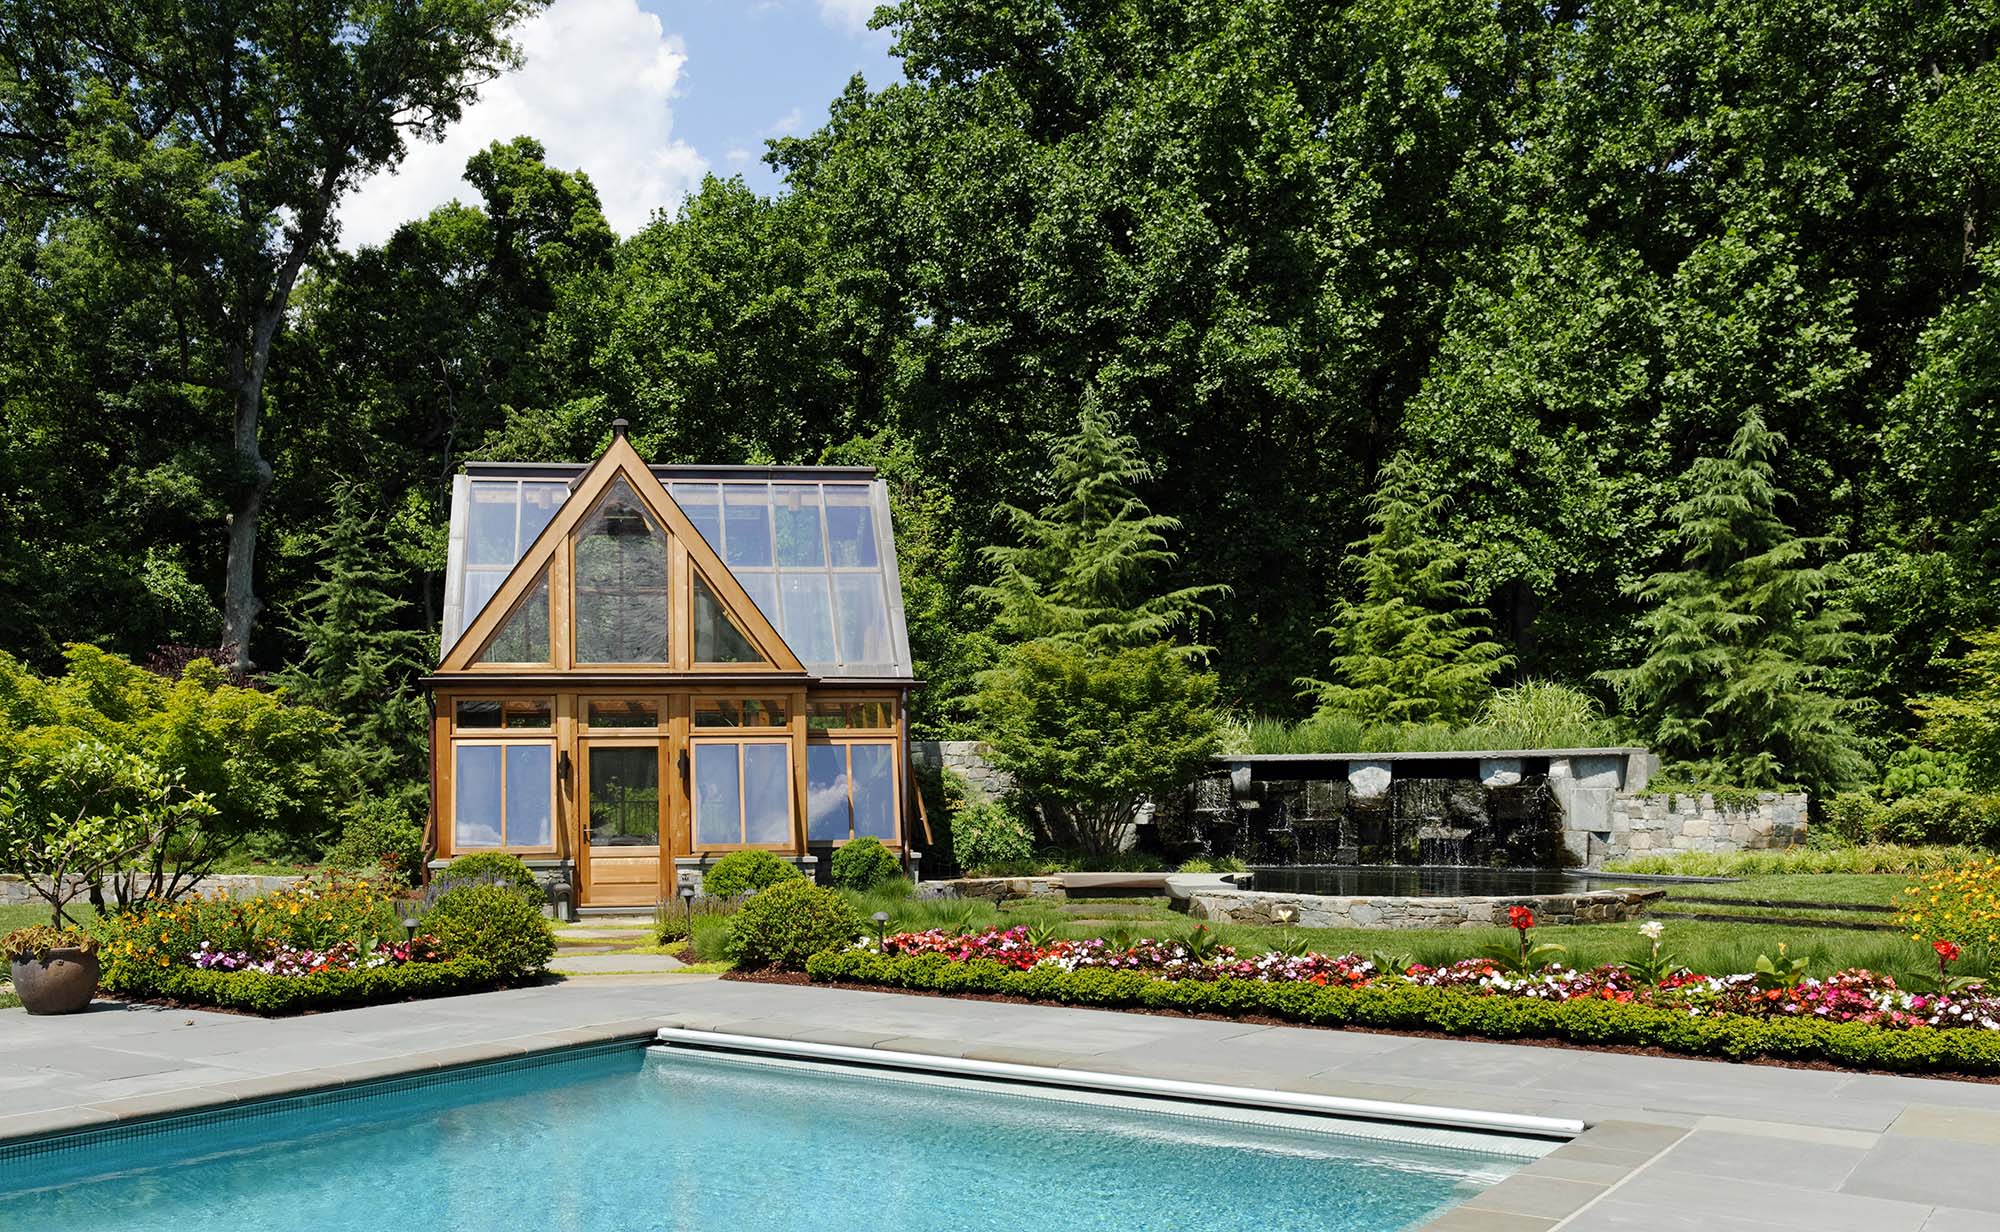 cedar greenhouse | exterior | by pool | beautiful landscape architecture